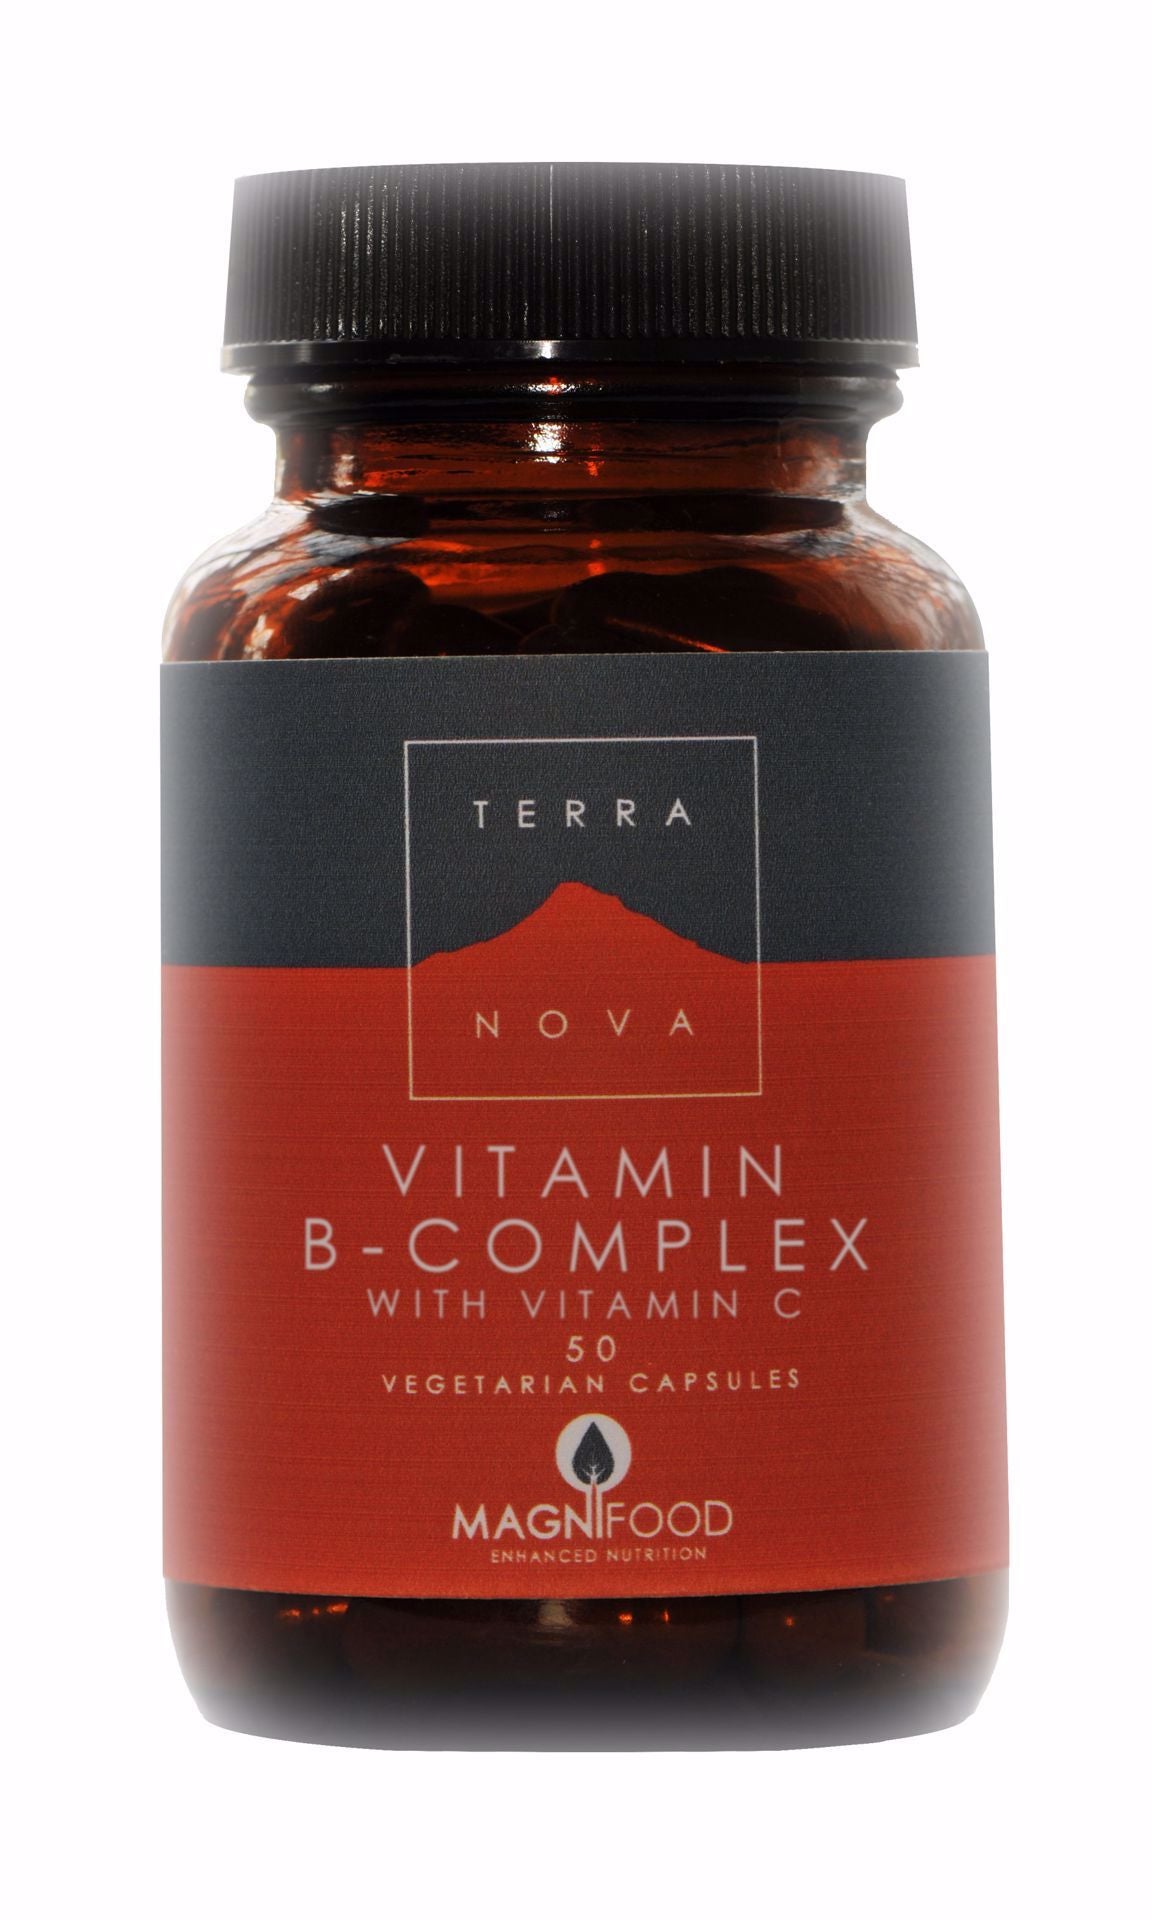 Terra Nova Vitamin B-Complex 50 vegetarian capsules